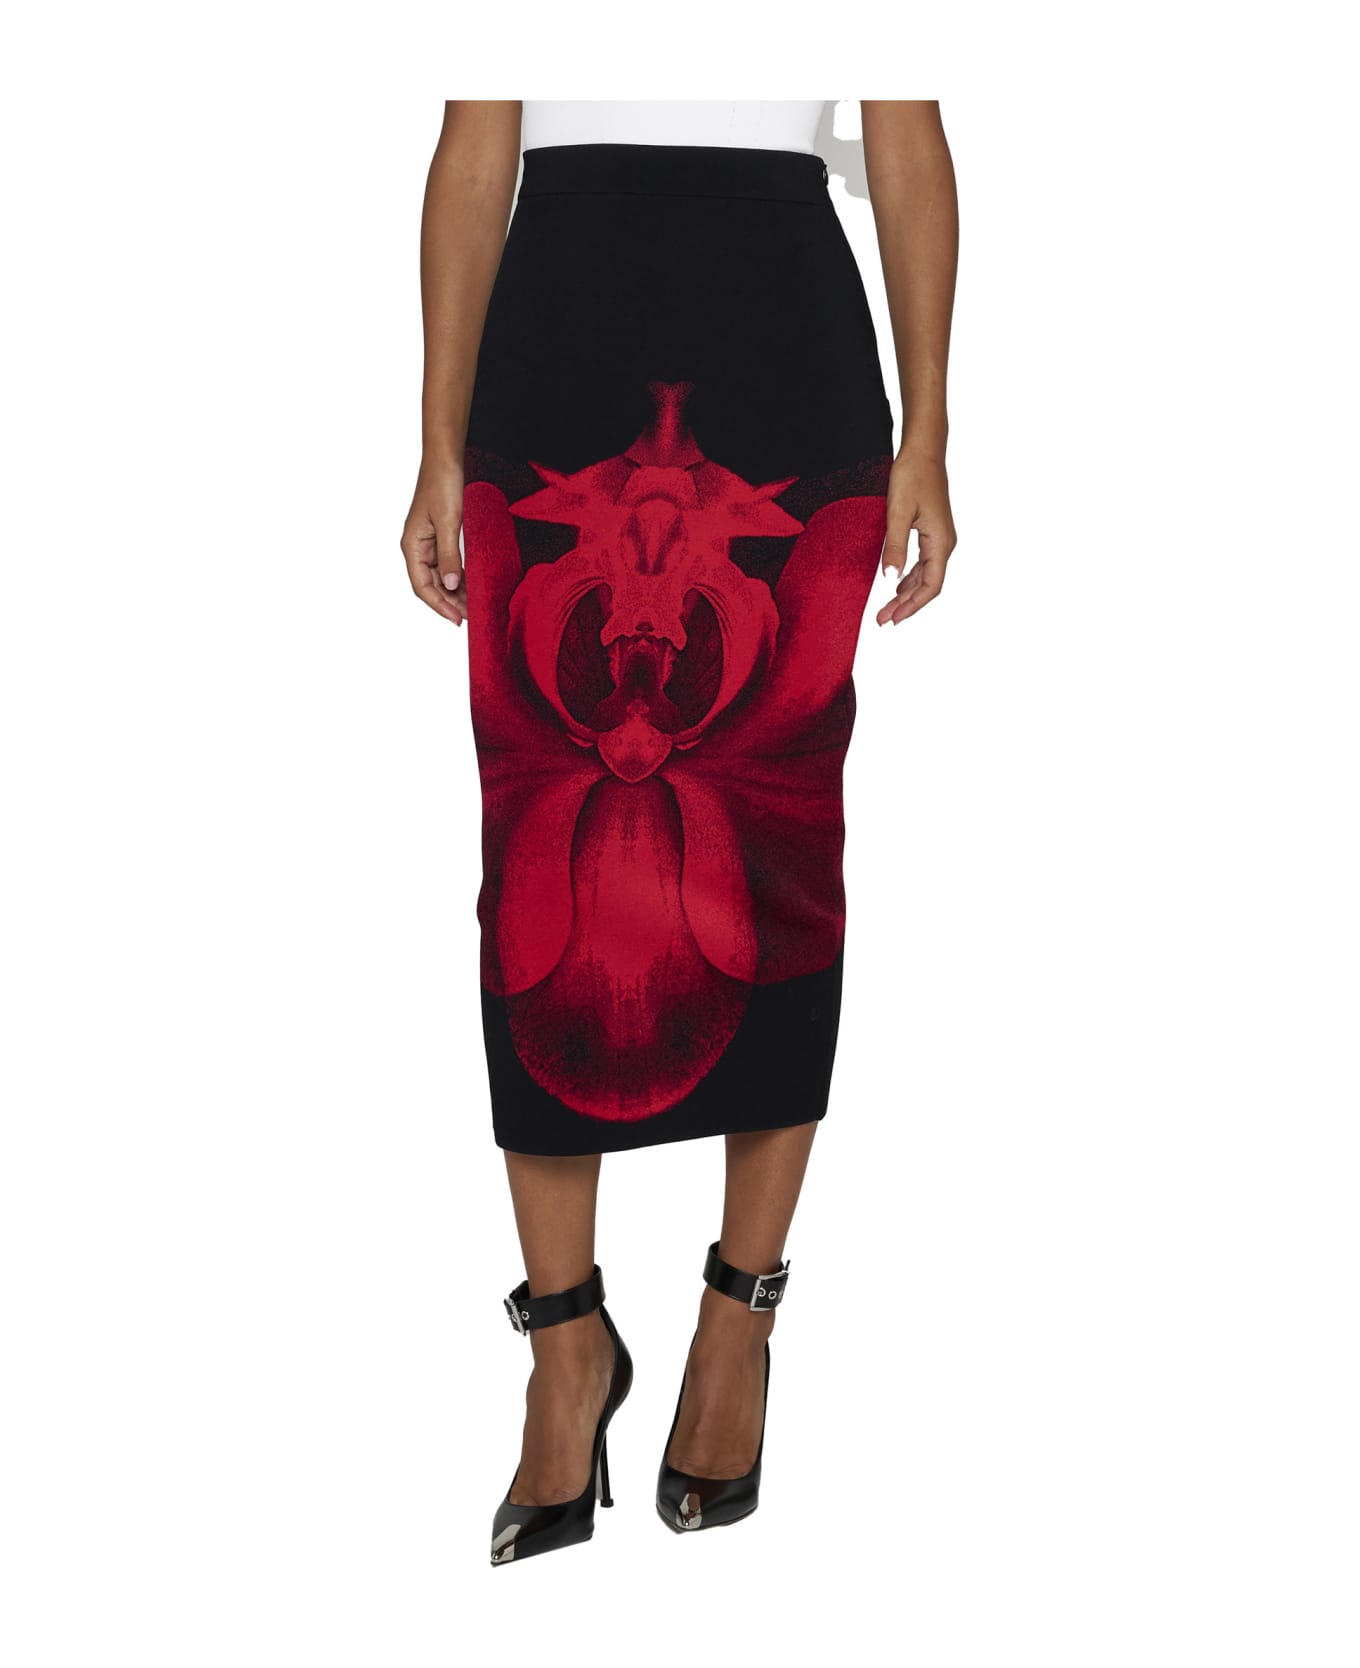 Alexander McQueen Printed Skirt - Black red